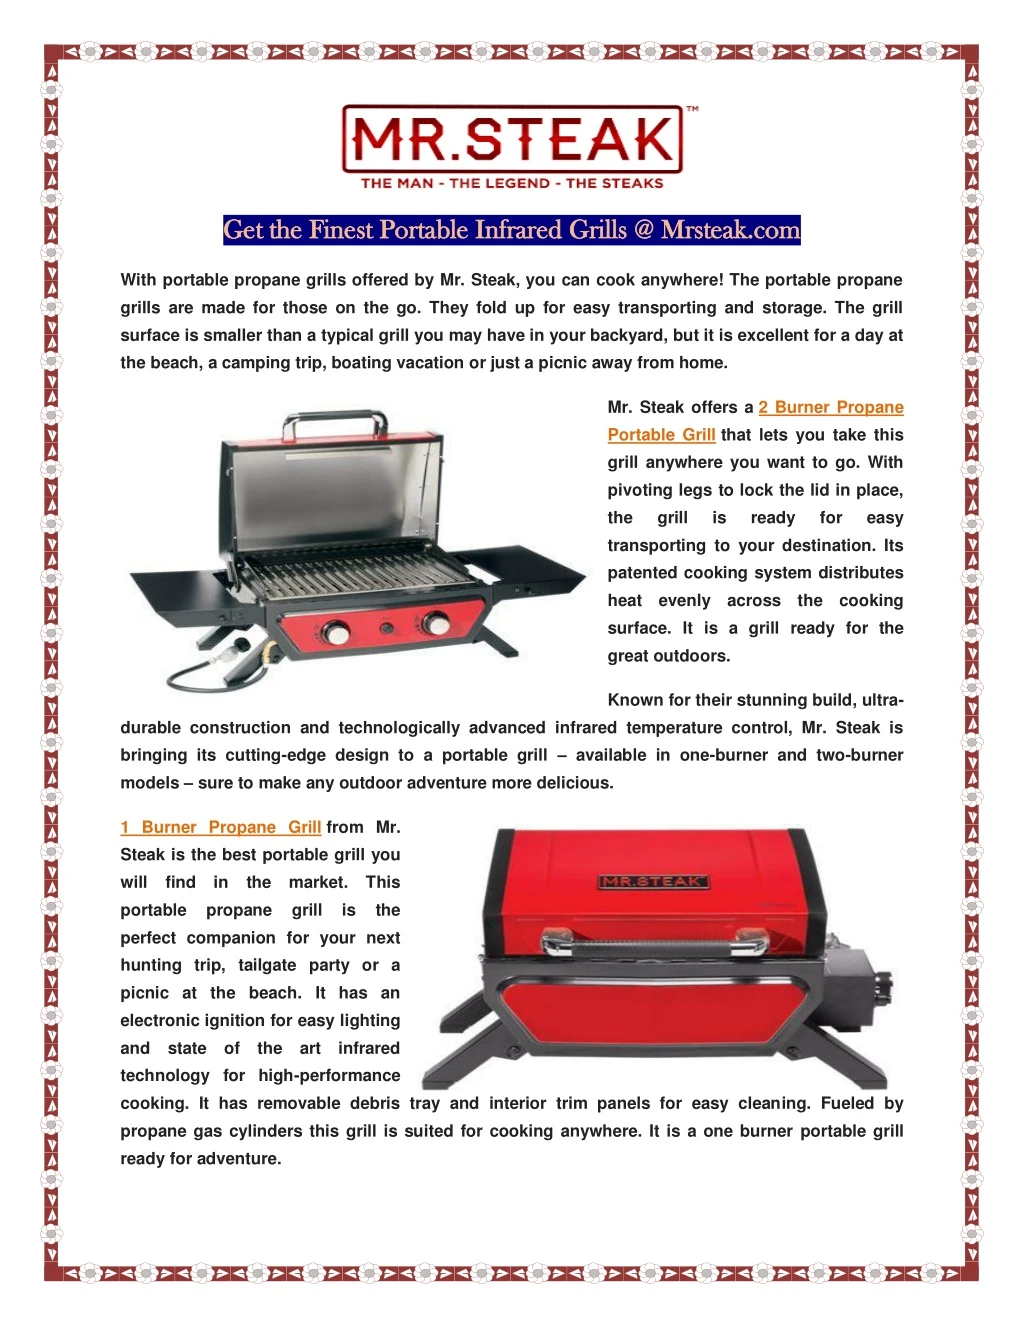 get the finest portable infrared grills @ mrsteak